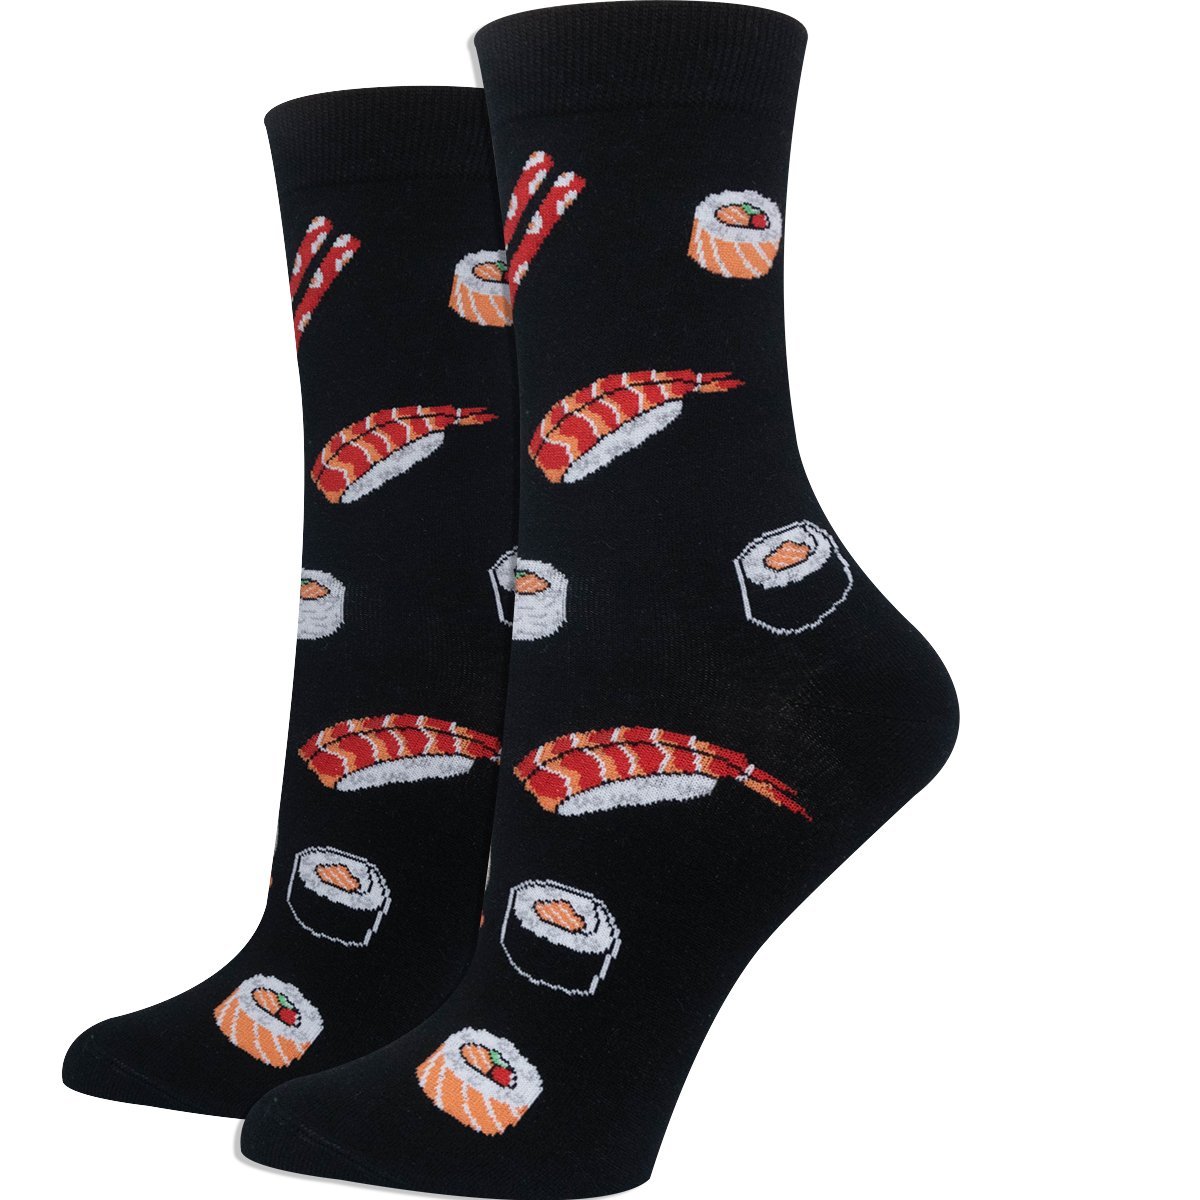 Sushi Socks - Imagery Socks